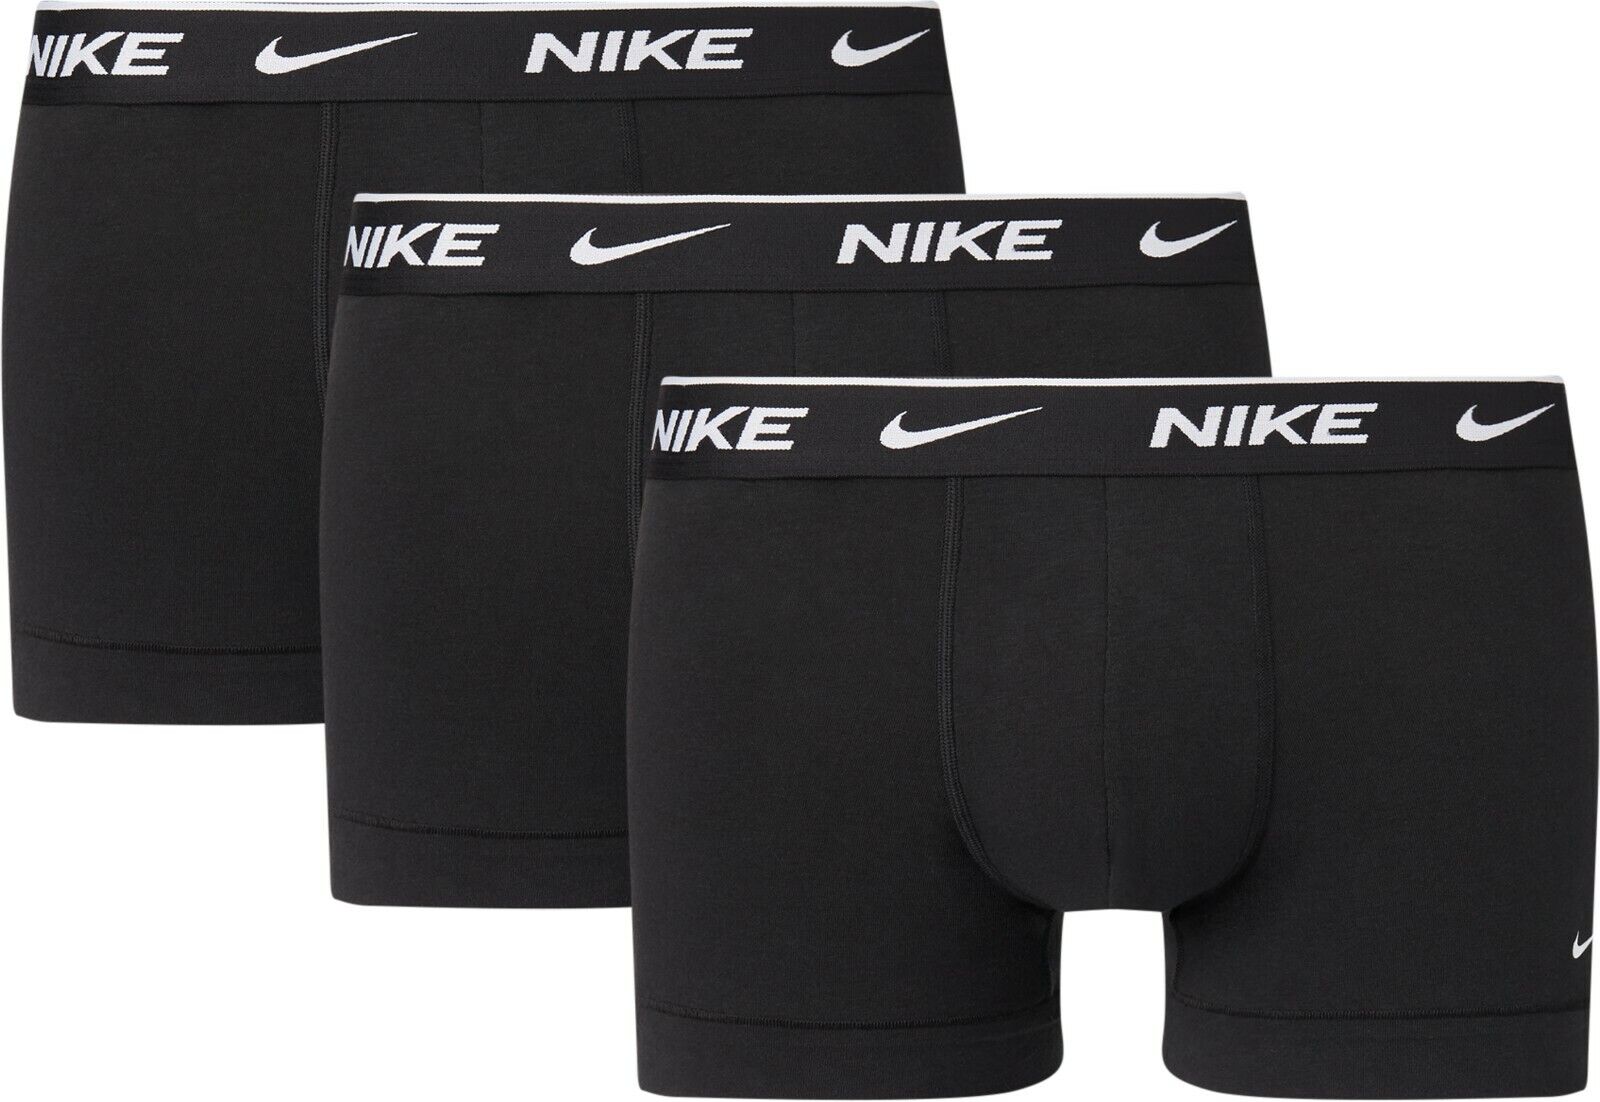 Nike Mens Boxer Shorts Boxers Pants Briefs Trunks Underwear Cotton 3 Pack XS-XL